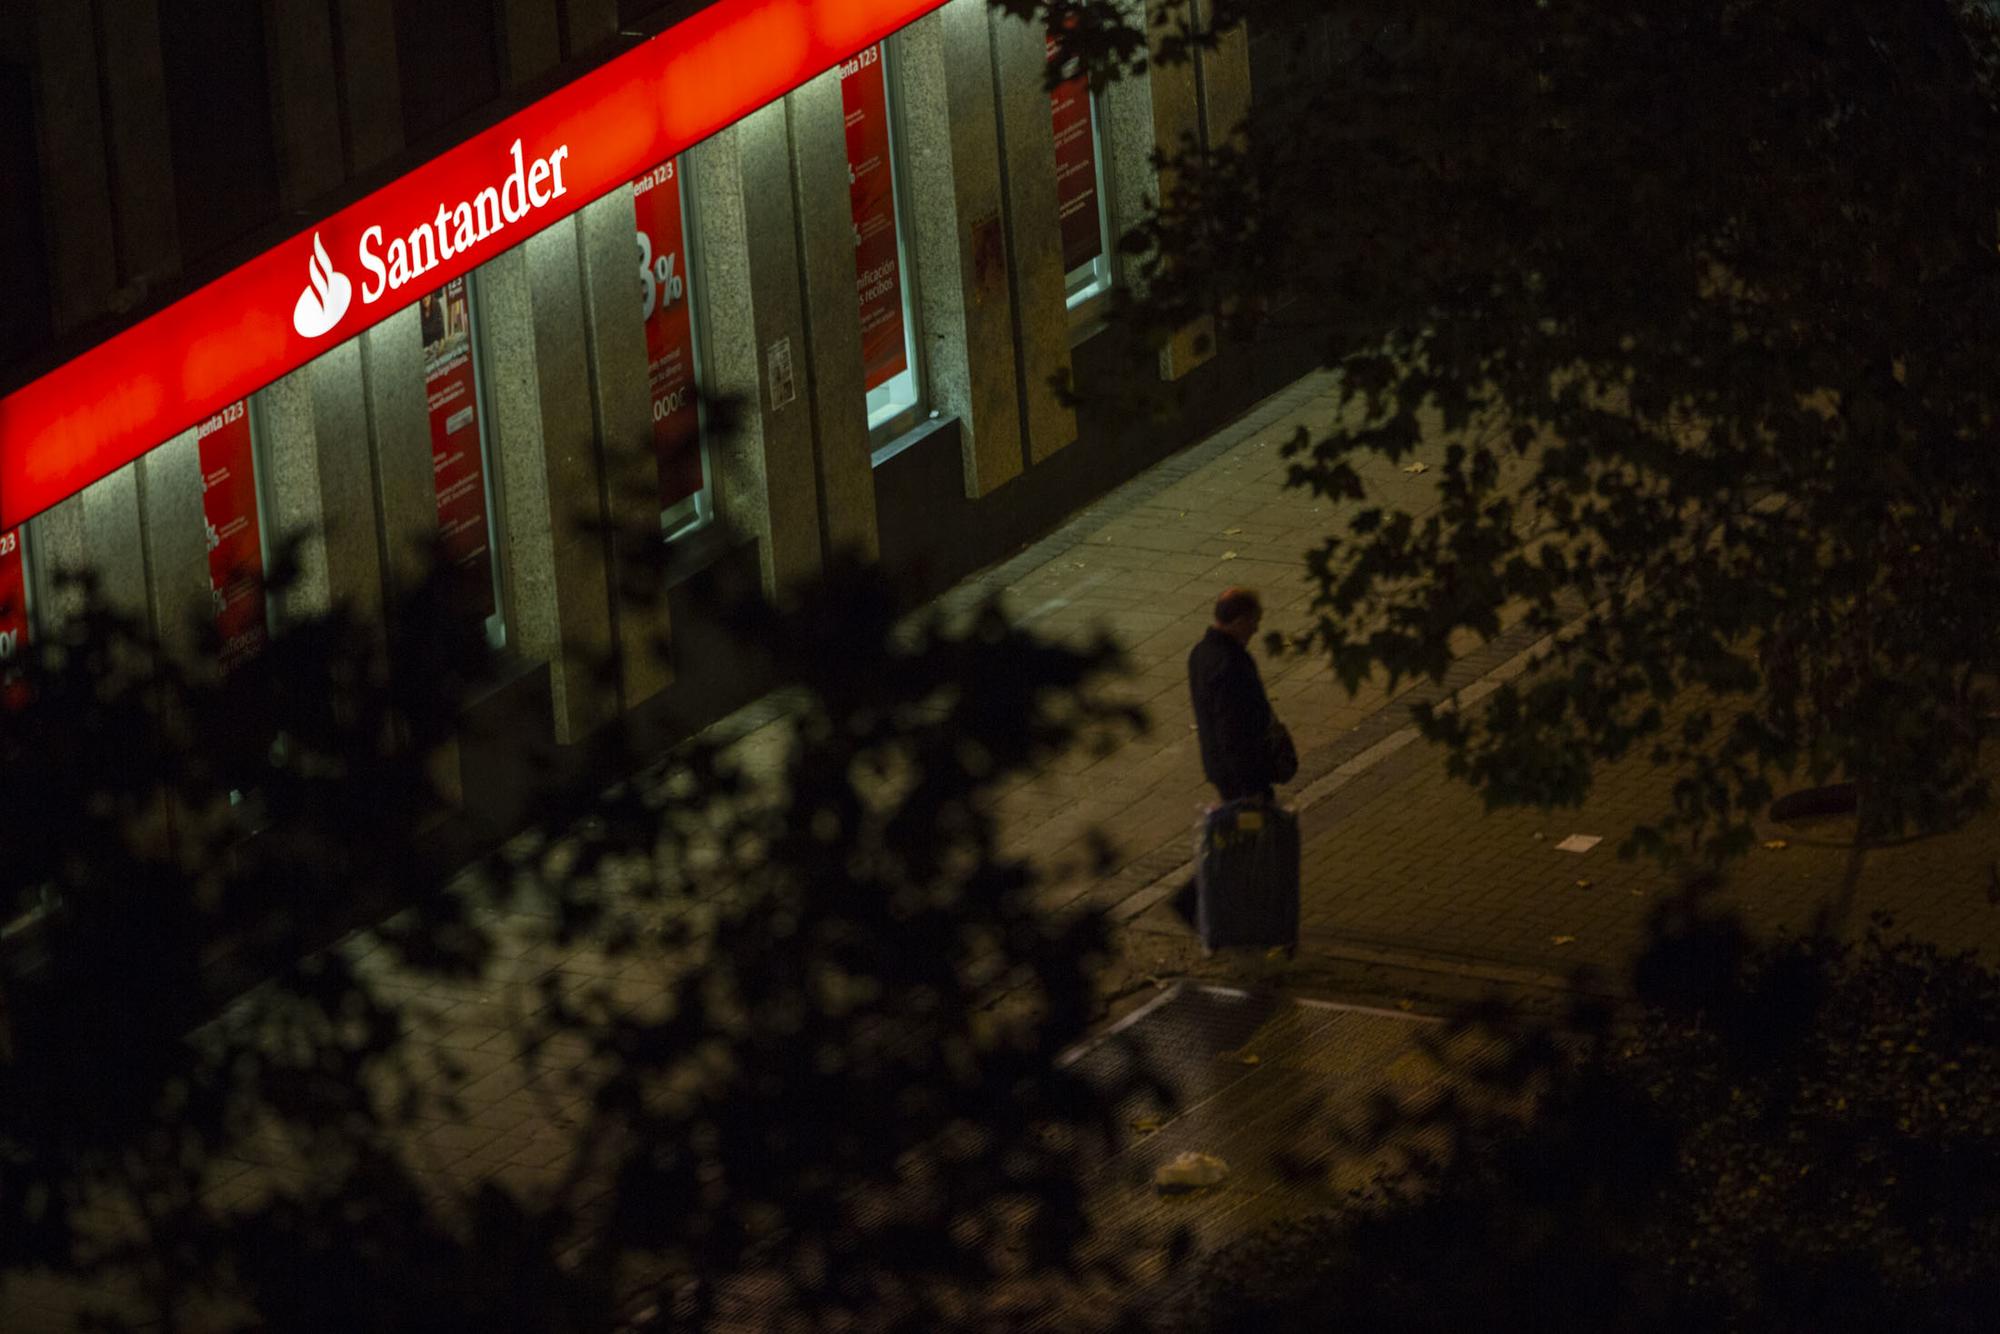 Sucursal Banco Santander